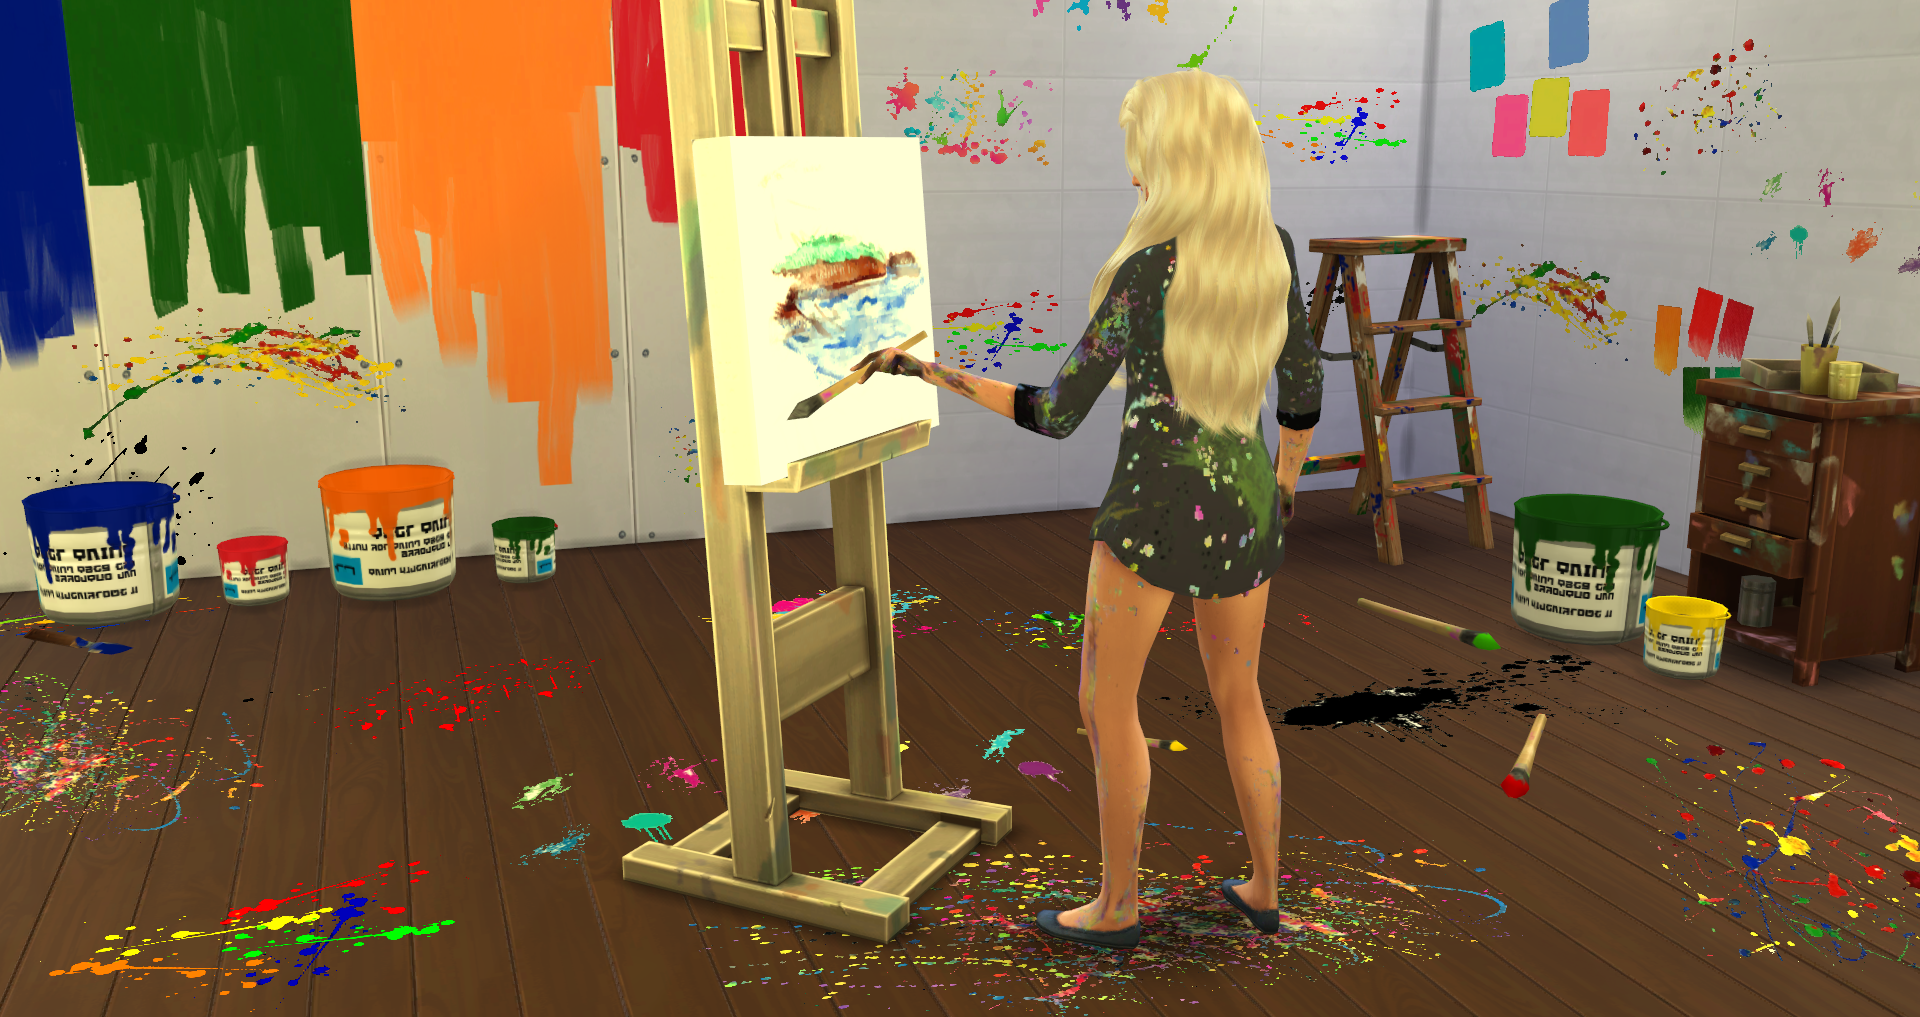 Cc free images, download Sims 4 Paint Splatter Cc,My Sims 4 Blog Paint Spla...